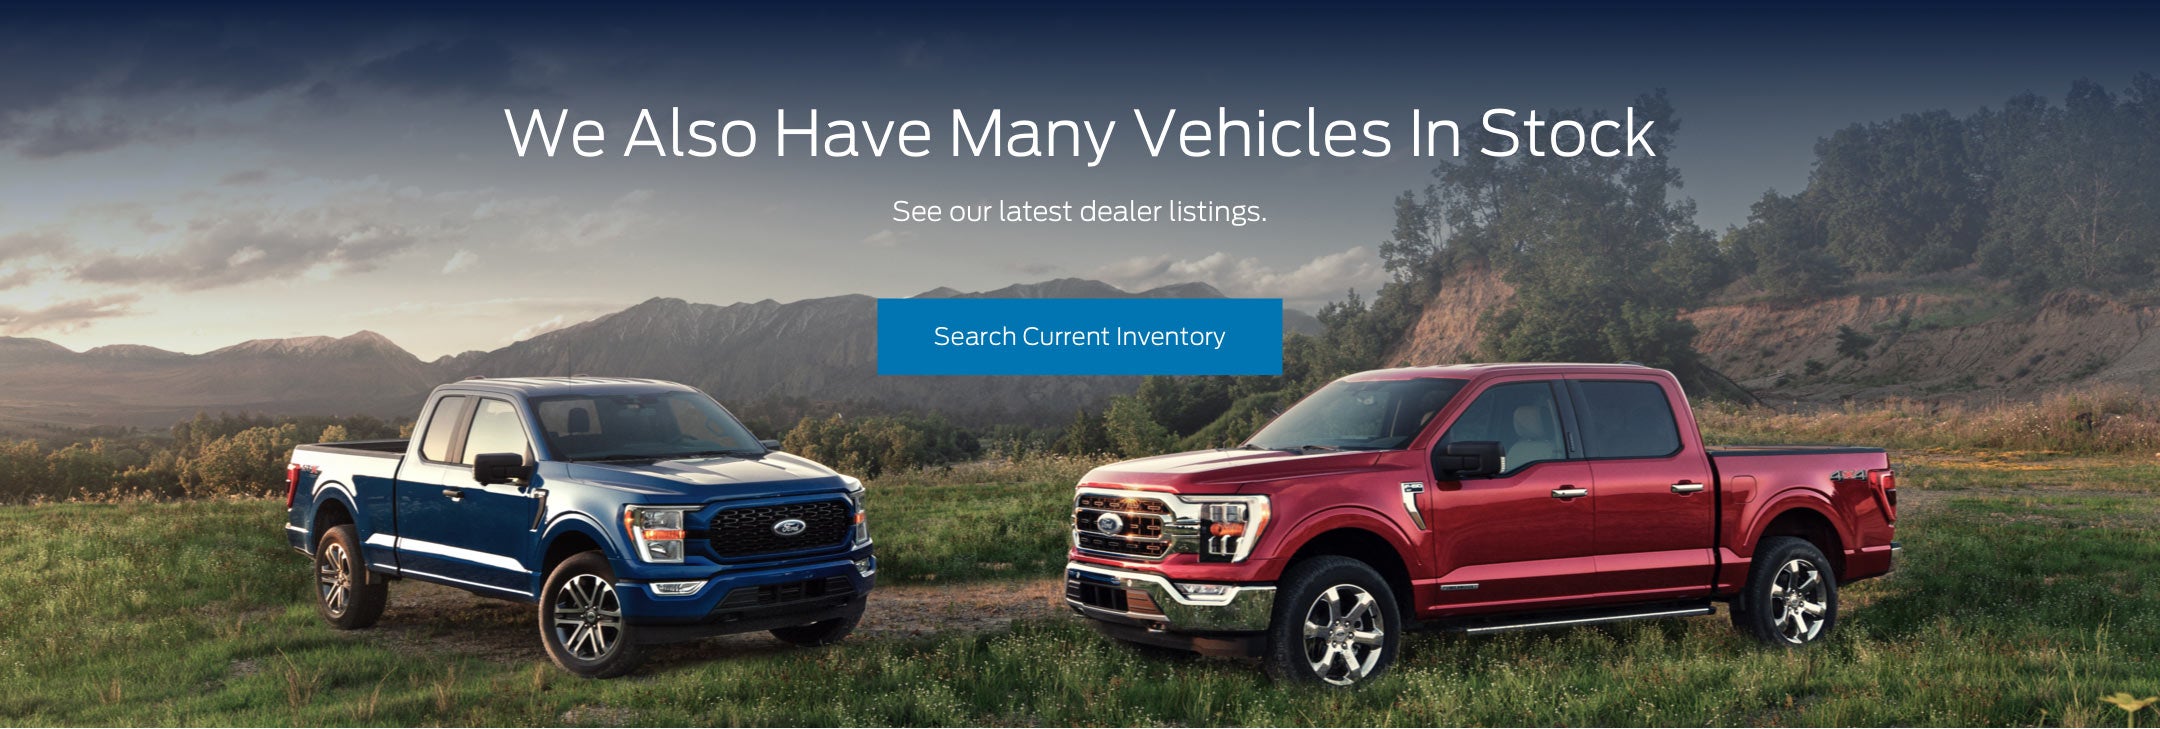 Ford vehicles in stock | Ford of Pleasanton in Pleasanton TX